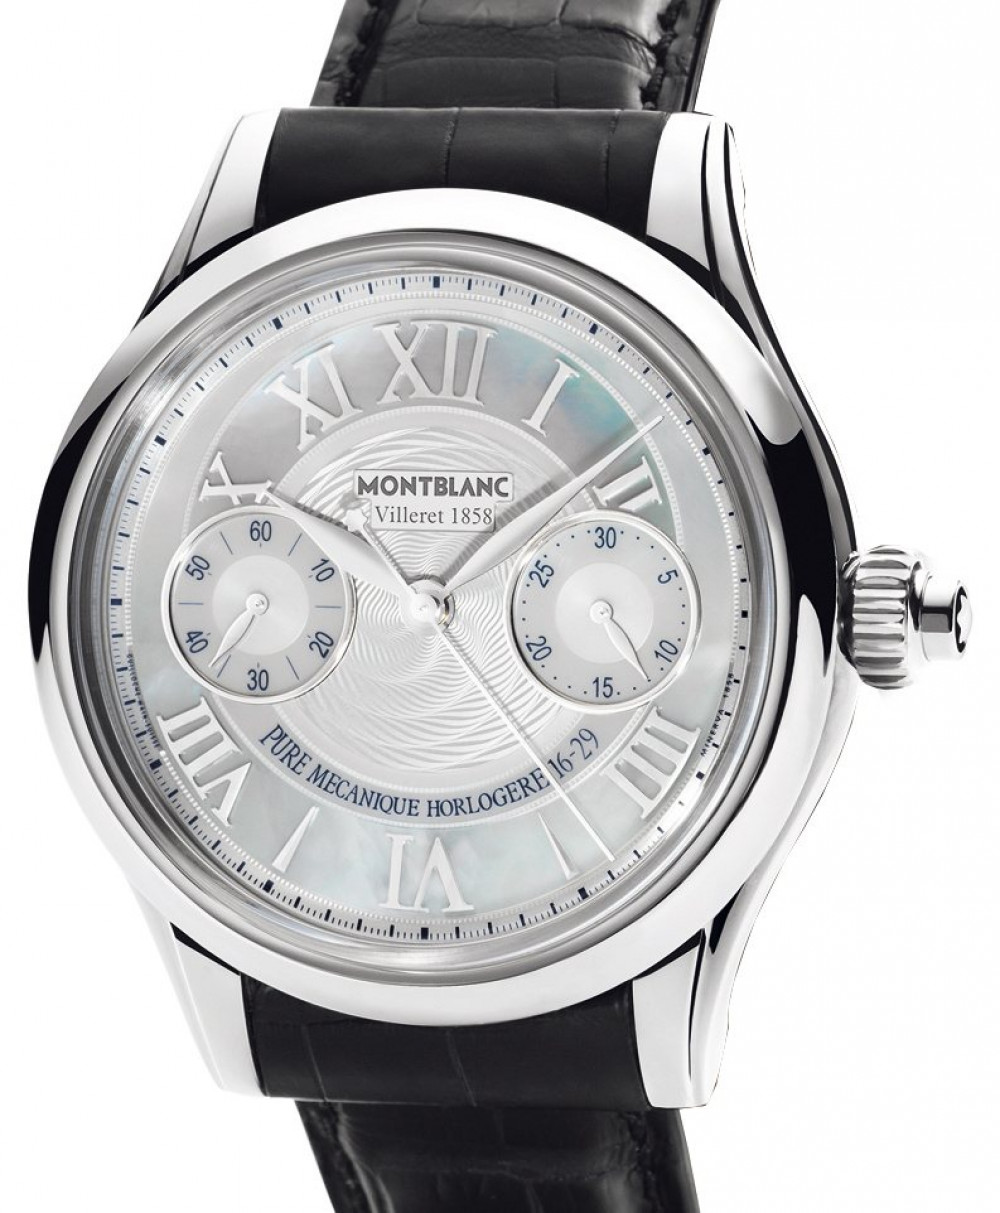 Zegarek firmy Montblanc, model Grand Chronographe Authentique